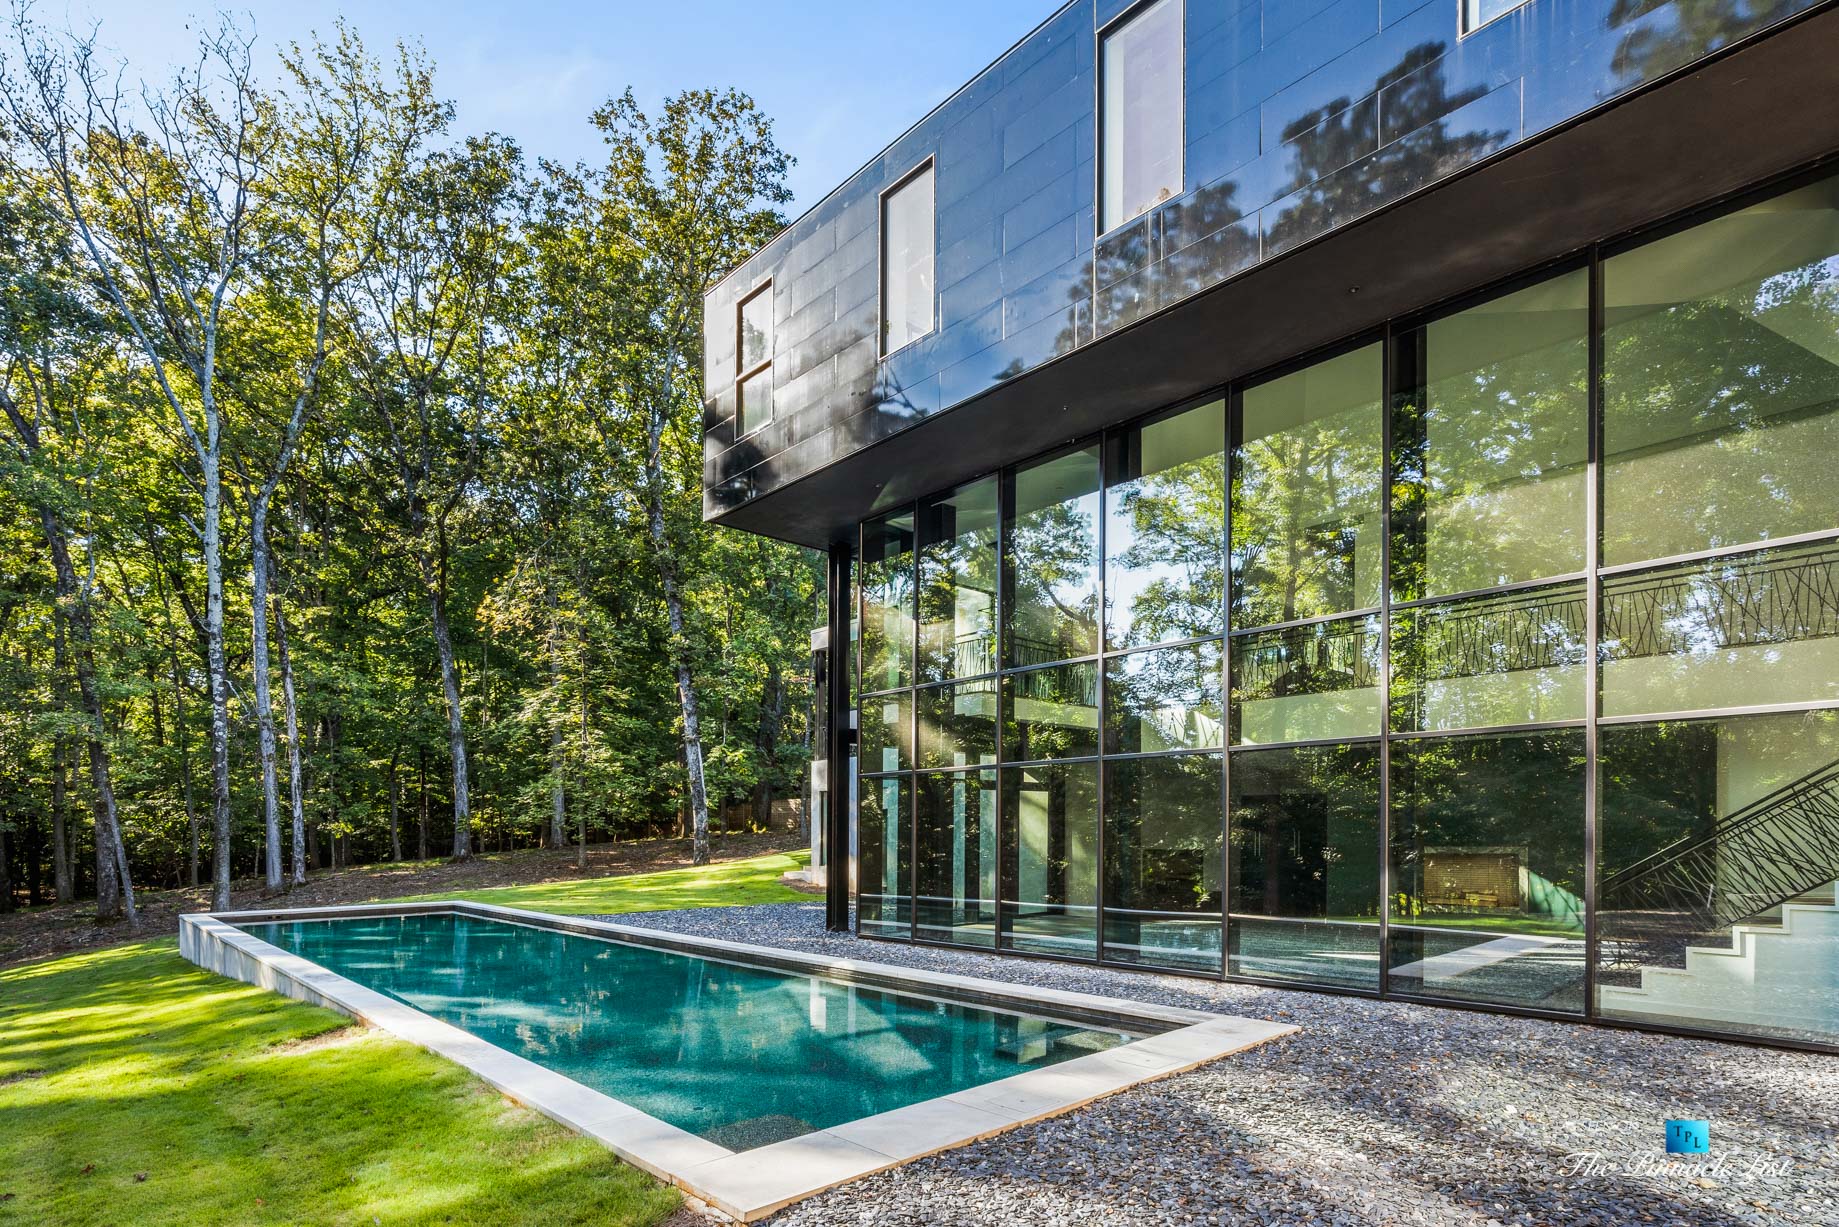 2716 Ridgewood Rd NW, Atlanta, GA, USA – Backyard Pool View – Luxury Real Estate – Modern Contemporary Buckhead Home